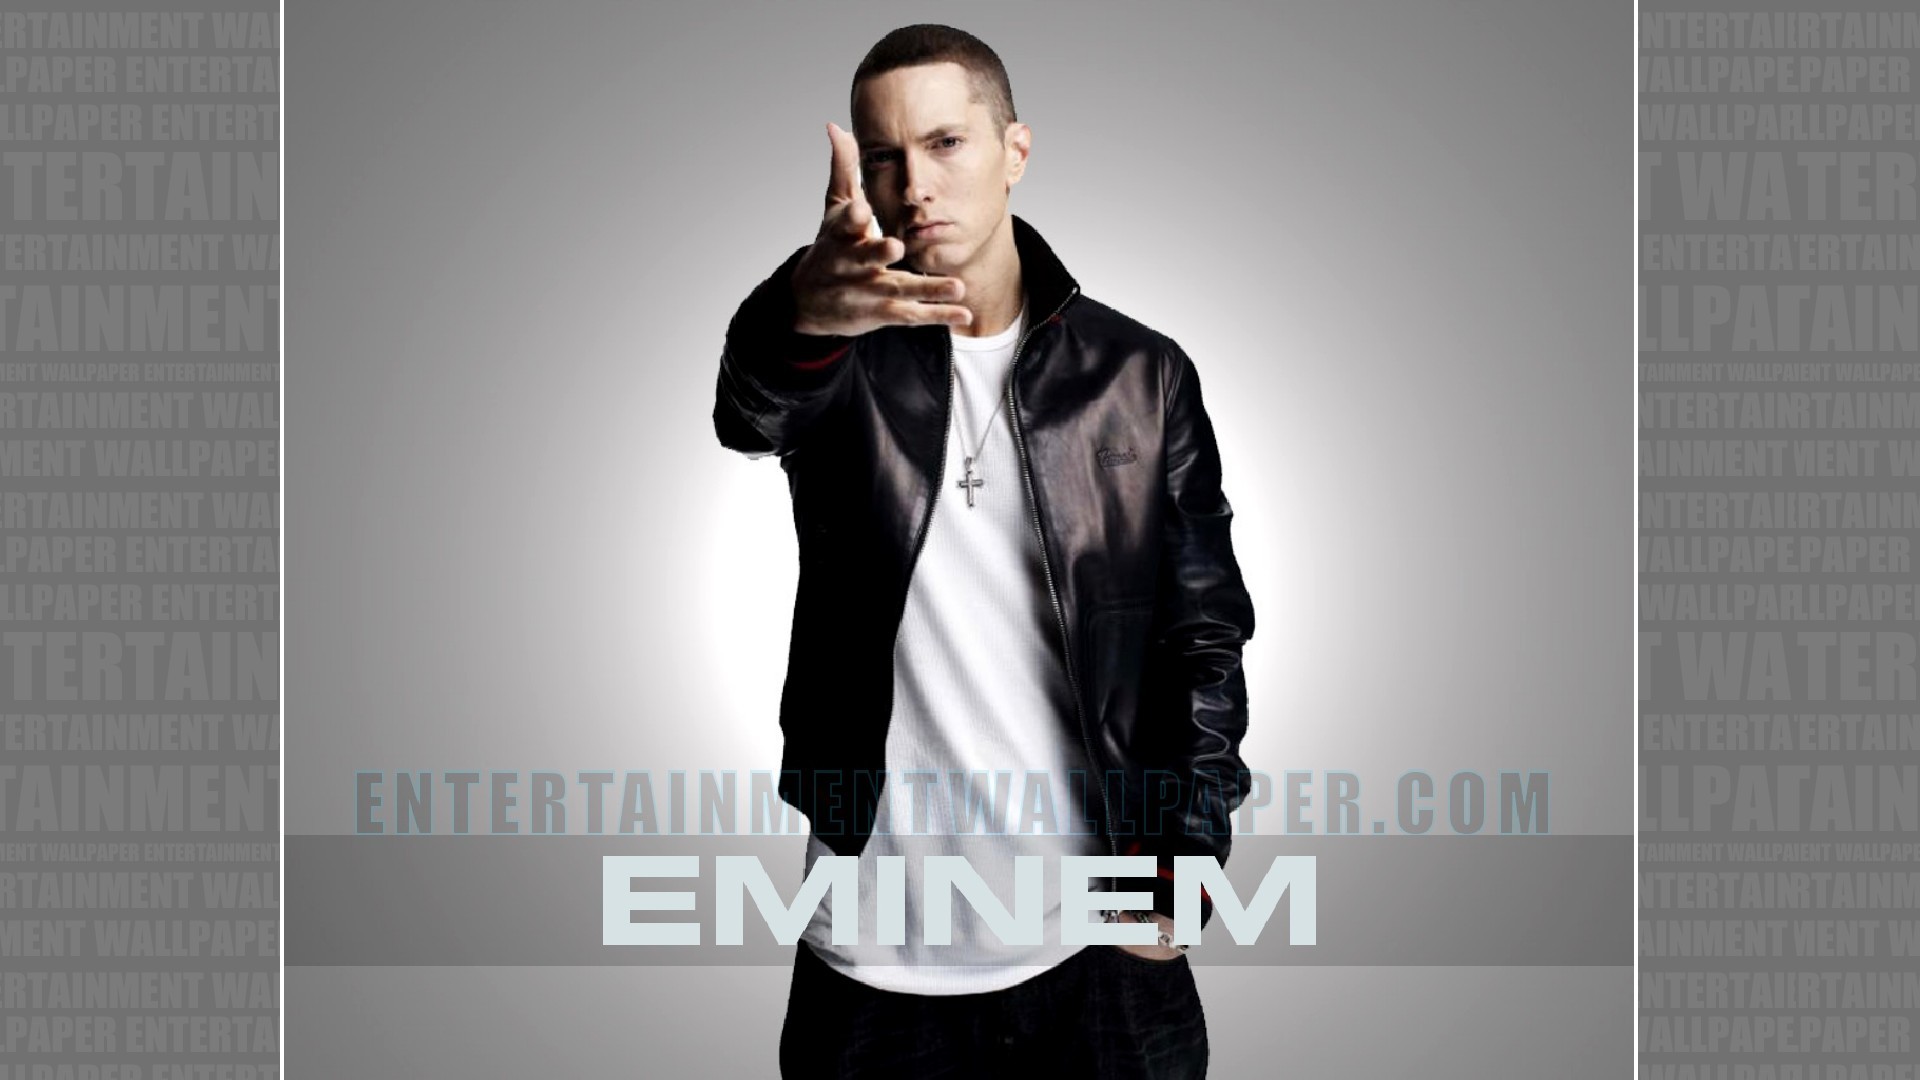 1920x1080 Eminem Wallpaper - Original size, download now.